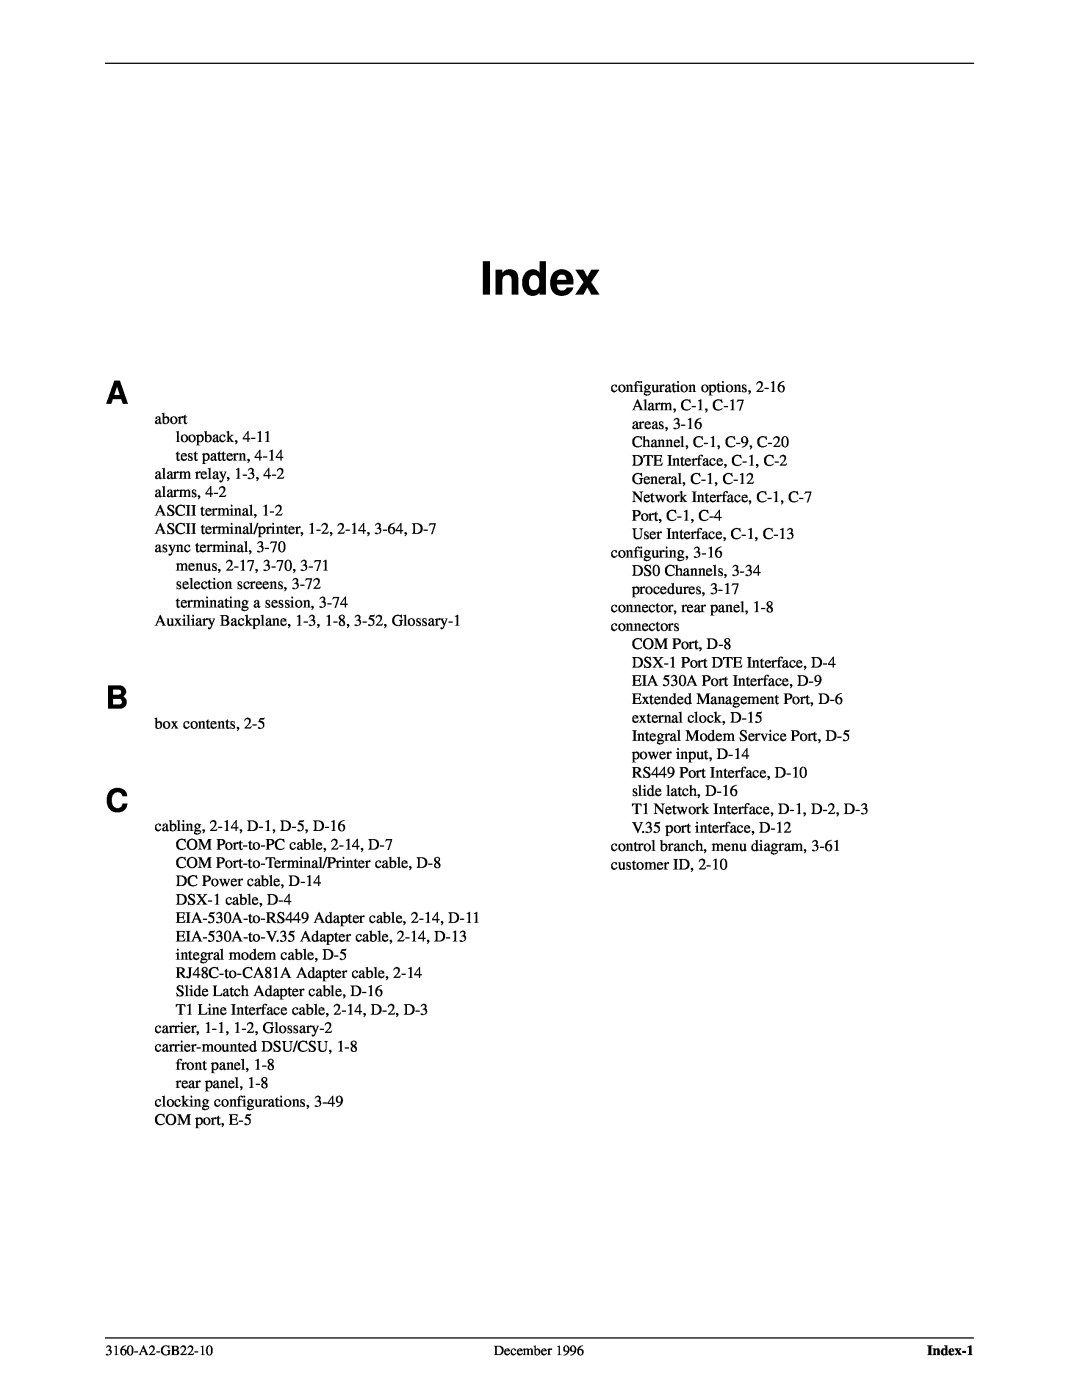 Paradyne 316x manual Index 